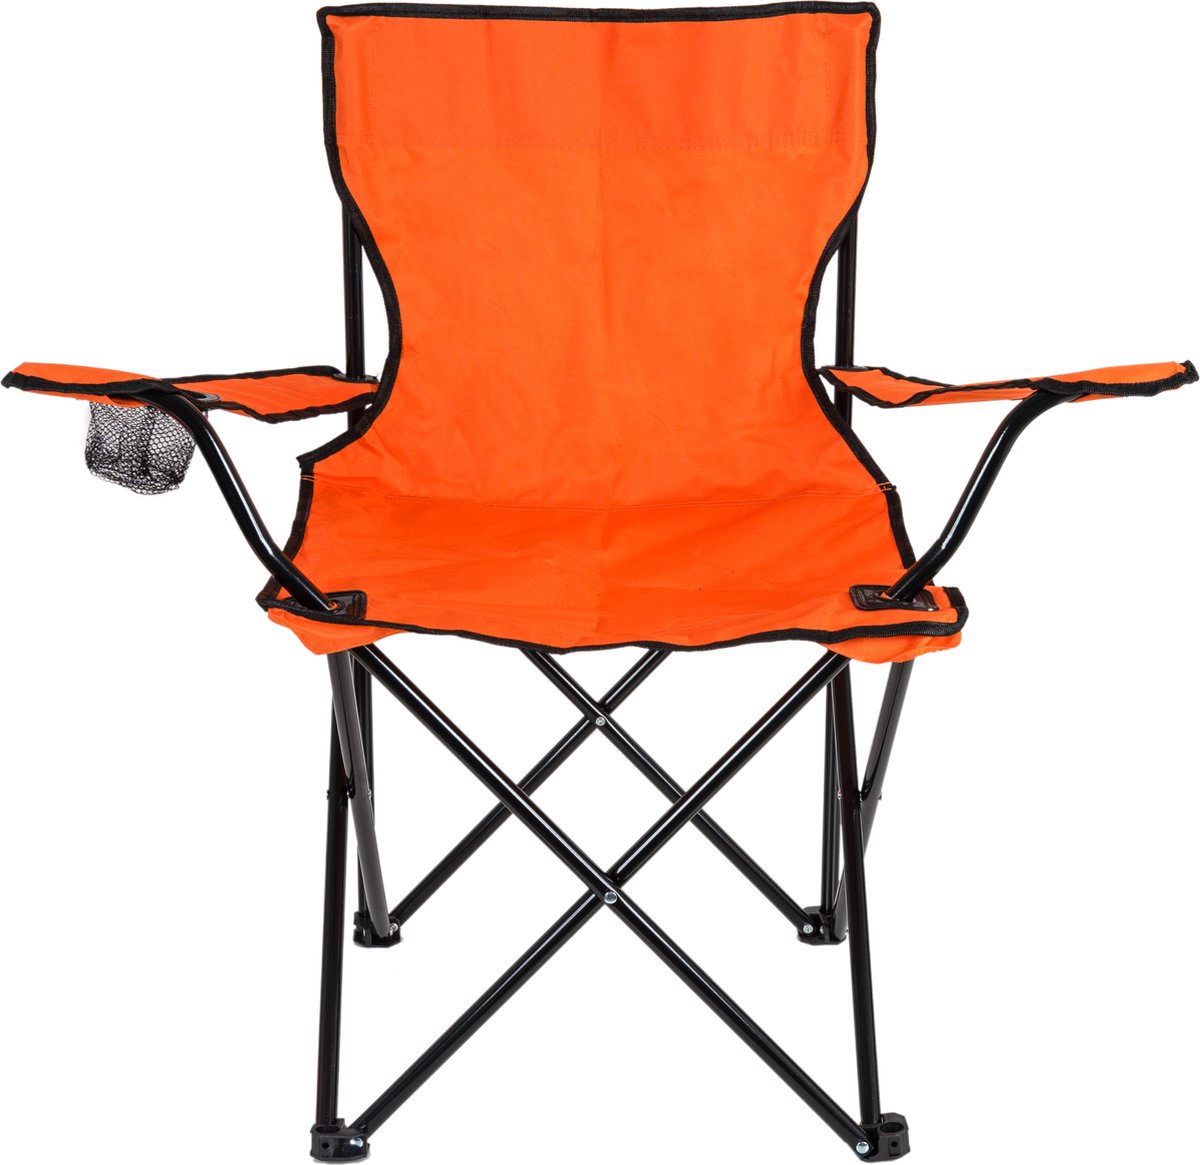 EASTWALL Folding Camping Chair Orange